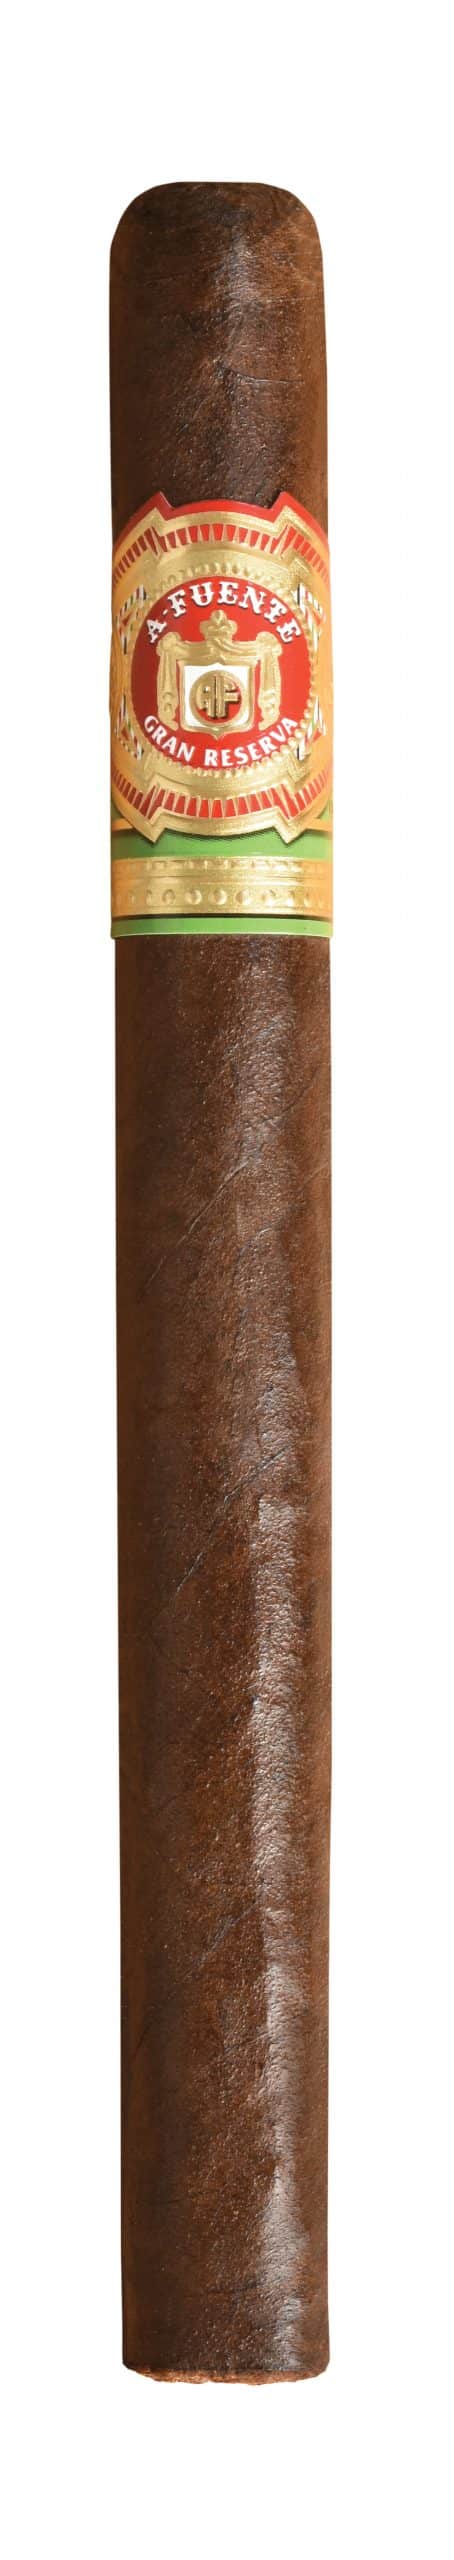 single arturo fuente spanish lonsdale maduro cigar